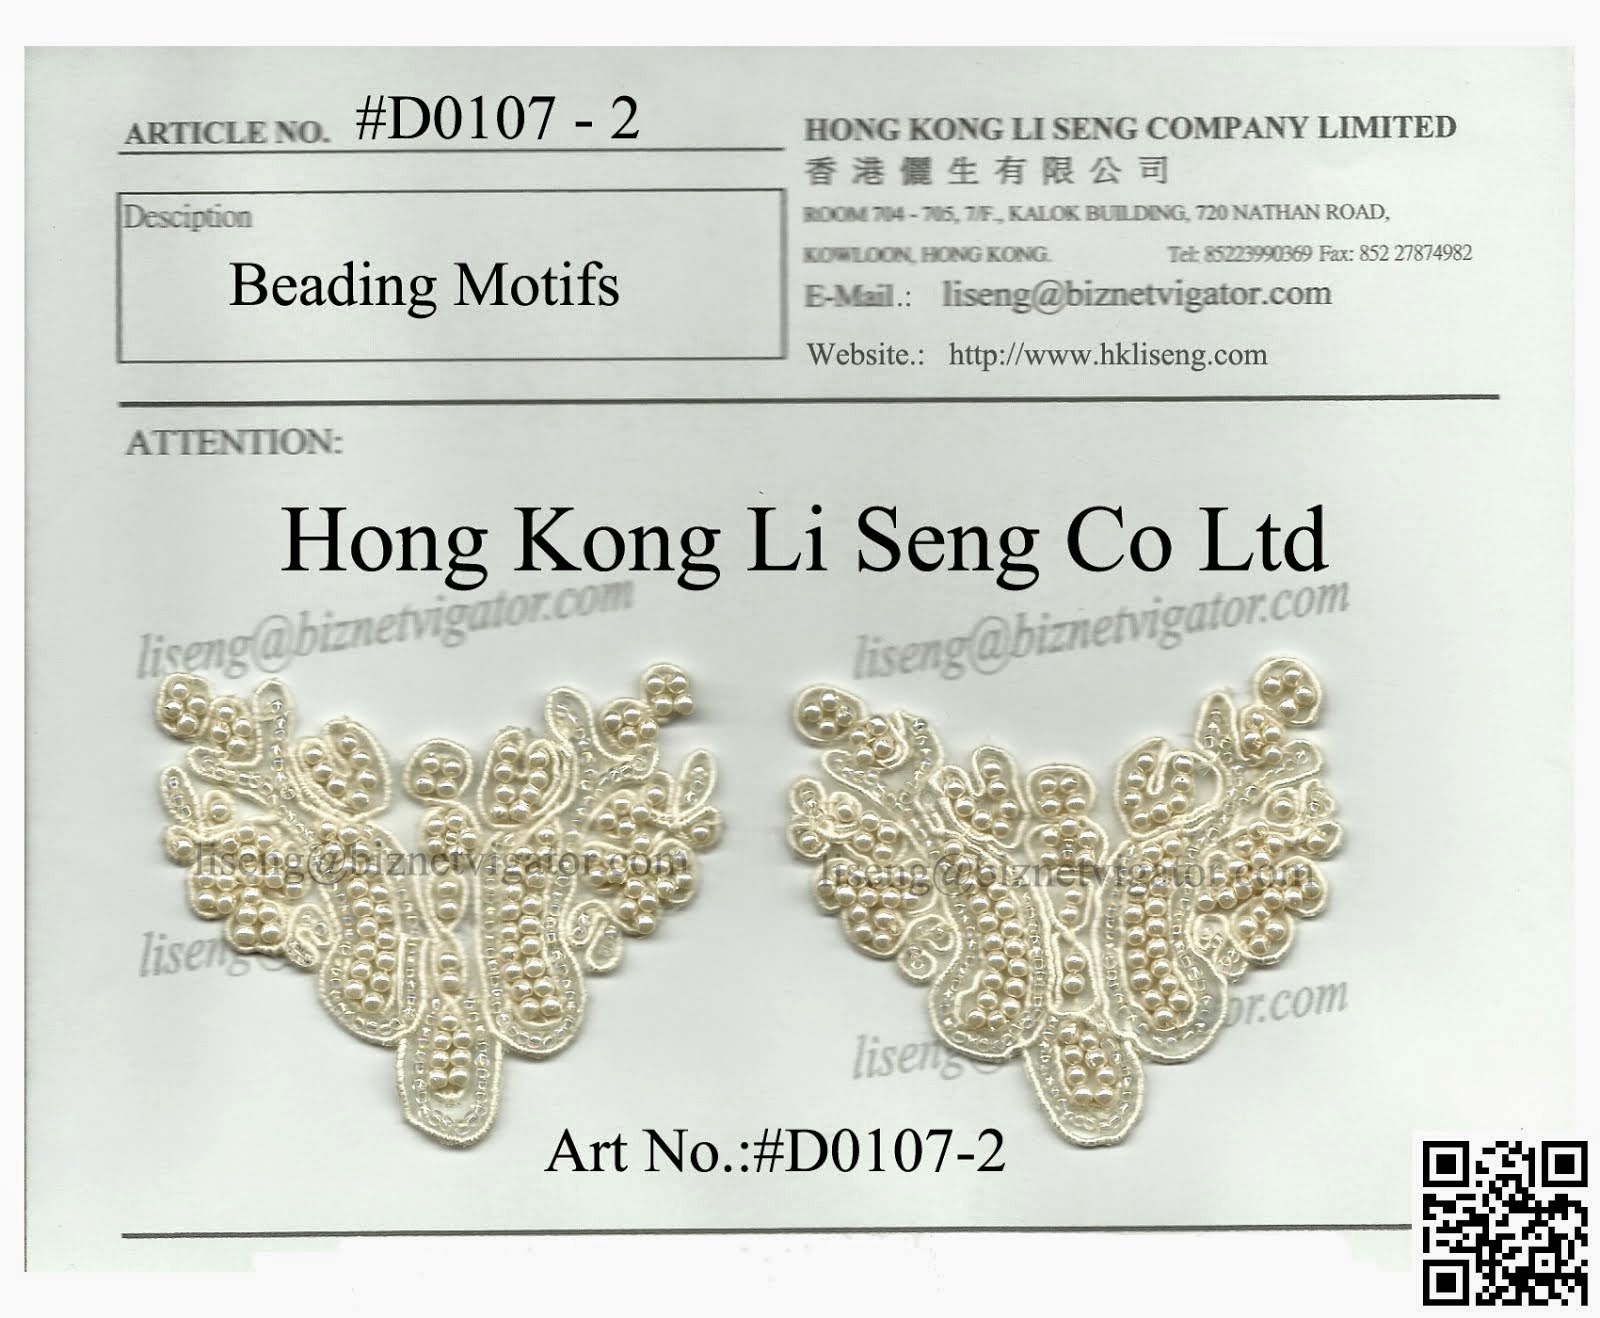 Beading Motif Manufacturer - Hong Kong Li Seng Co ltd